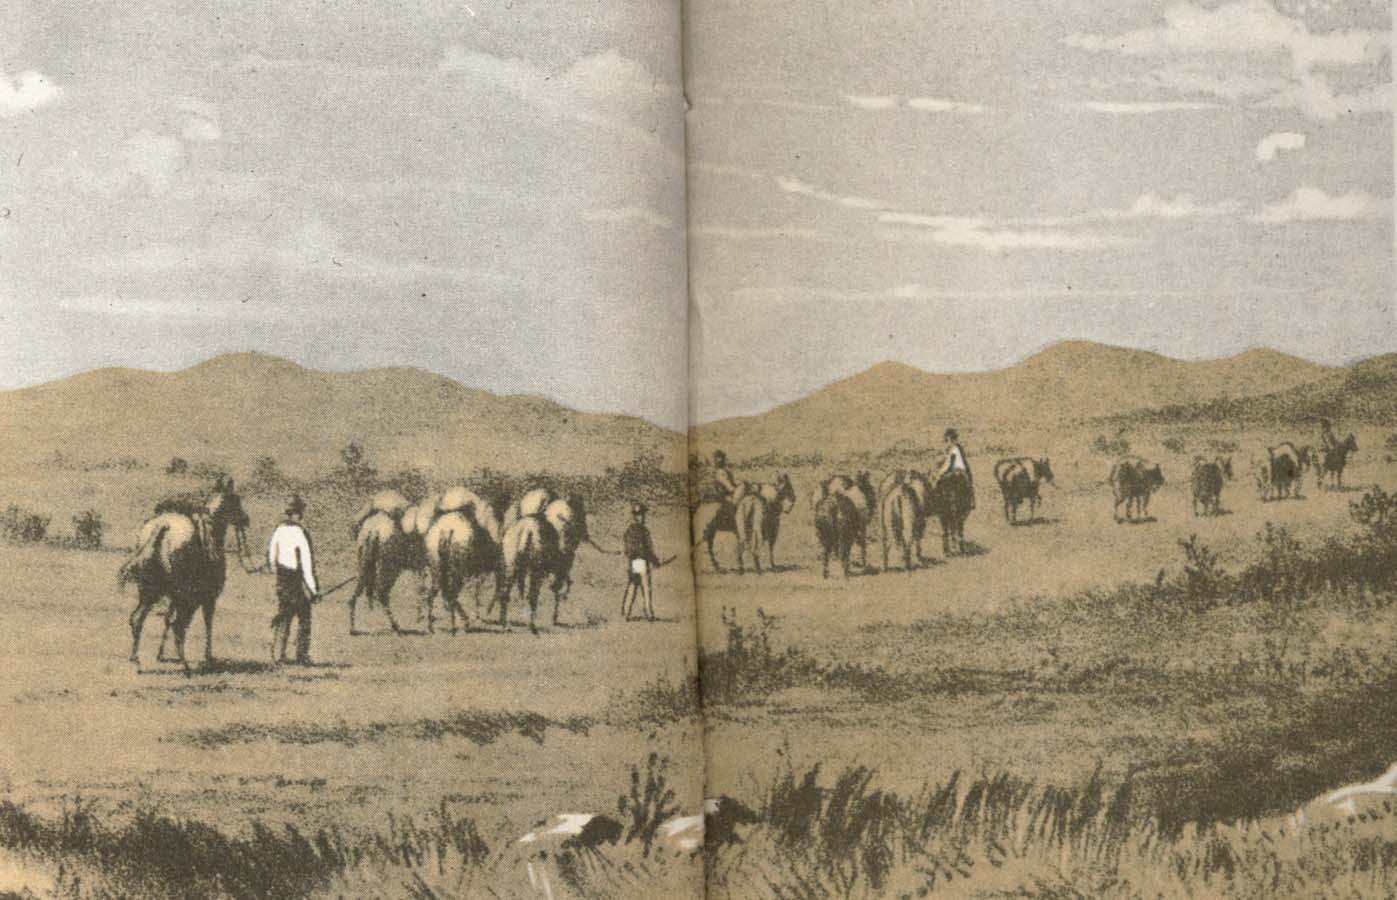 william r clark fohn forres expedition rastar nara murchison flodes kallor under farden 1874 fran vastra australien till telrgraflinjen soder om alice springs.